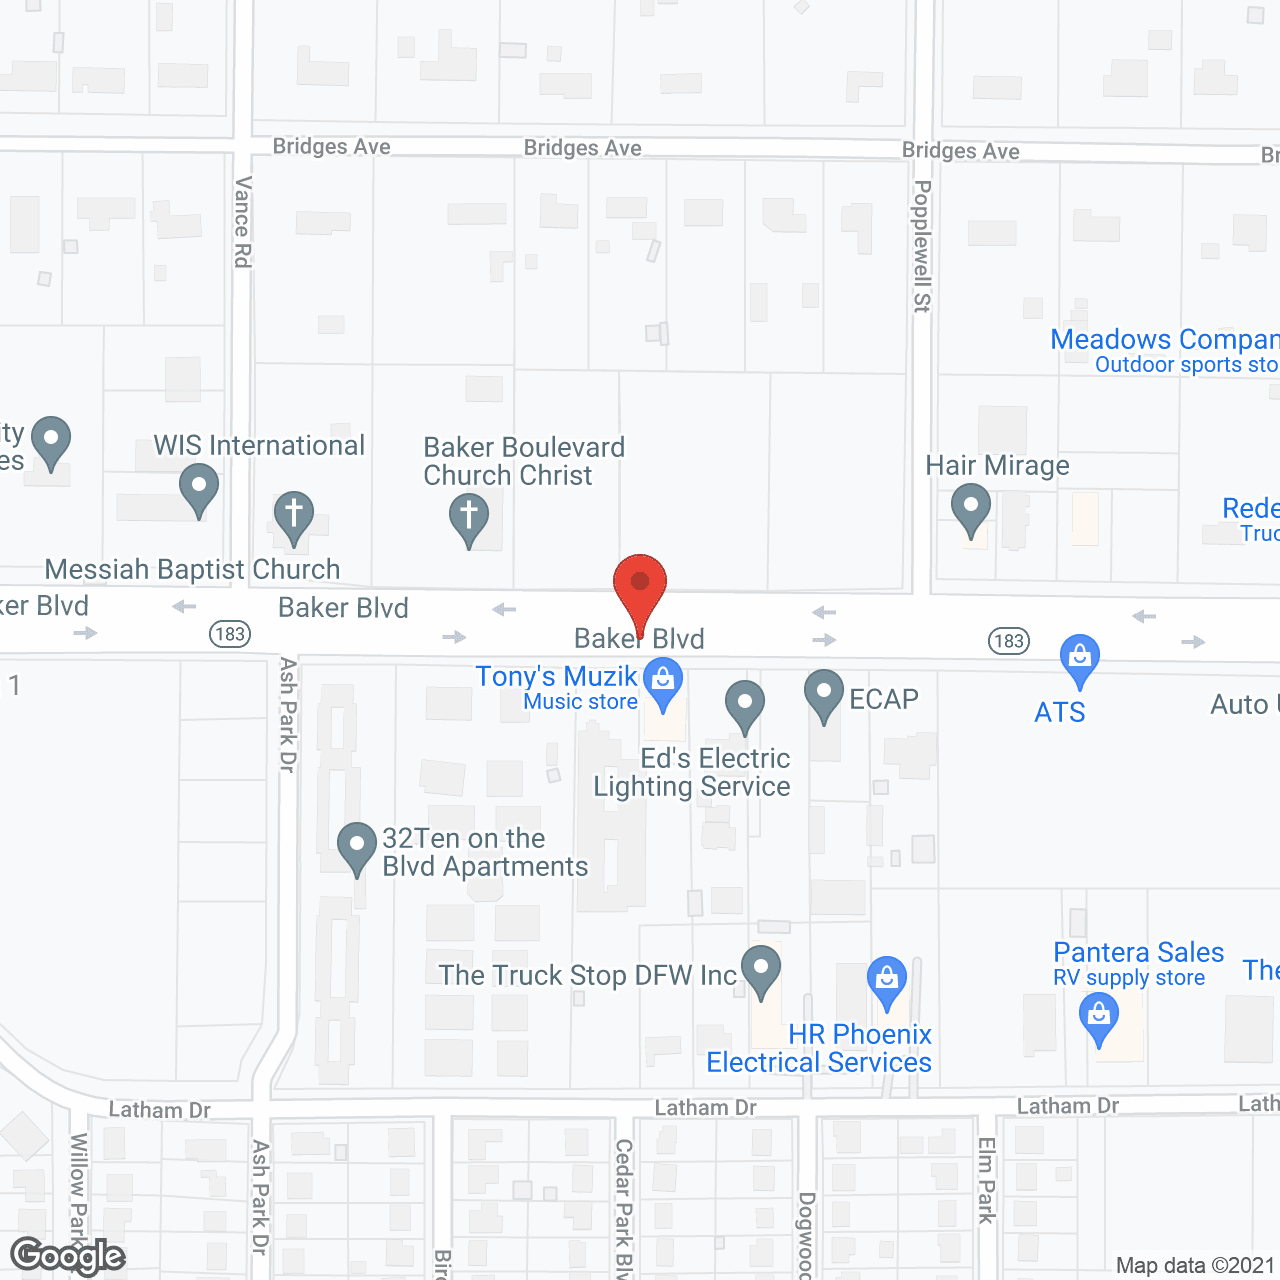 Lexington Place Richland Hills in google map